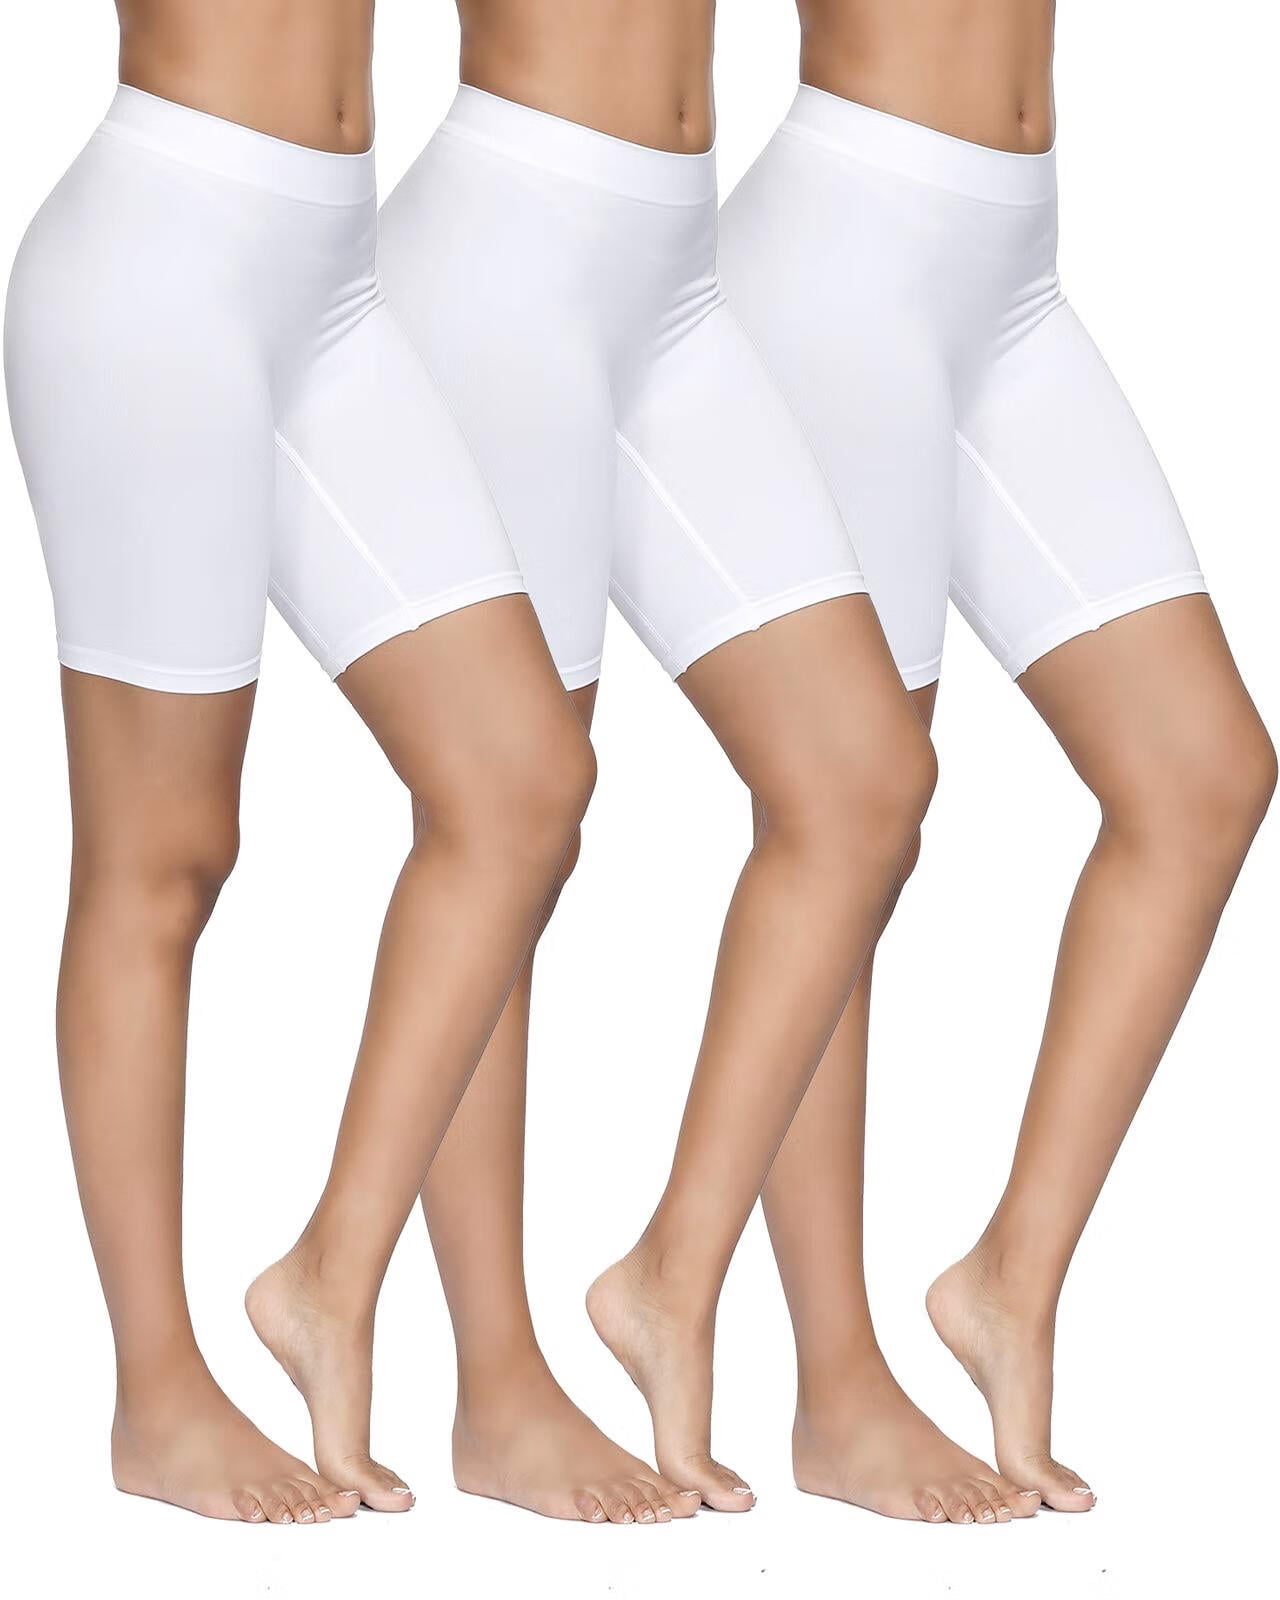 Slip Shorts for Women High Waisted Under Dresses Summer Shorts (Black/Nude/White)  